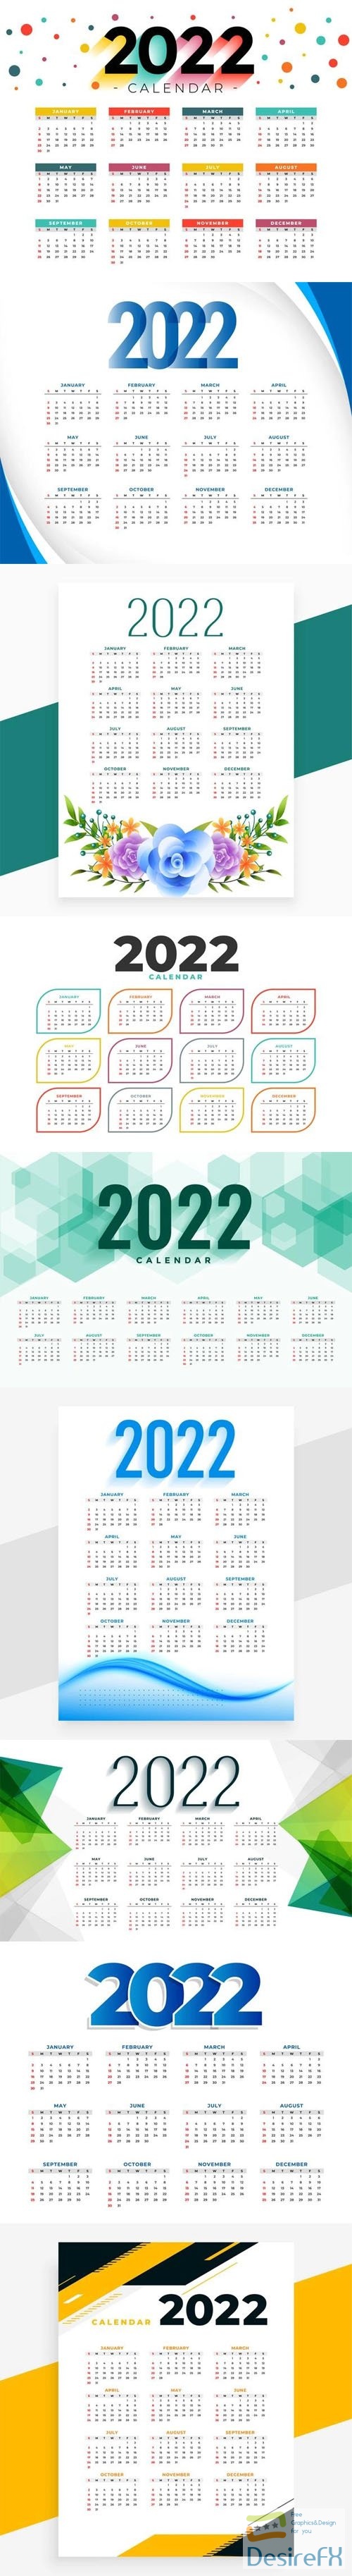 9 New Year 2022 Calendars Vector Design Templates